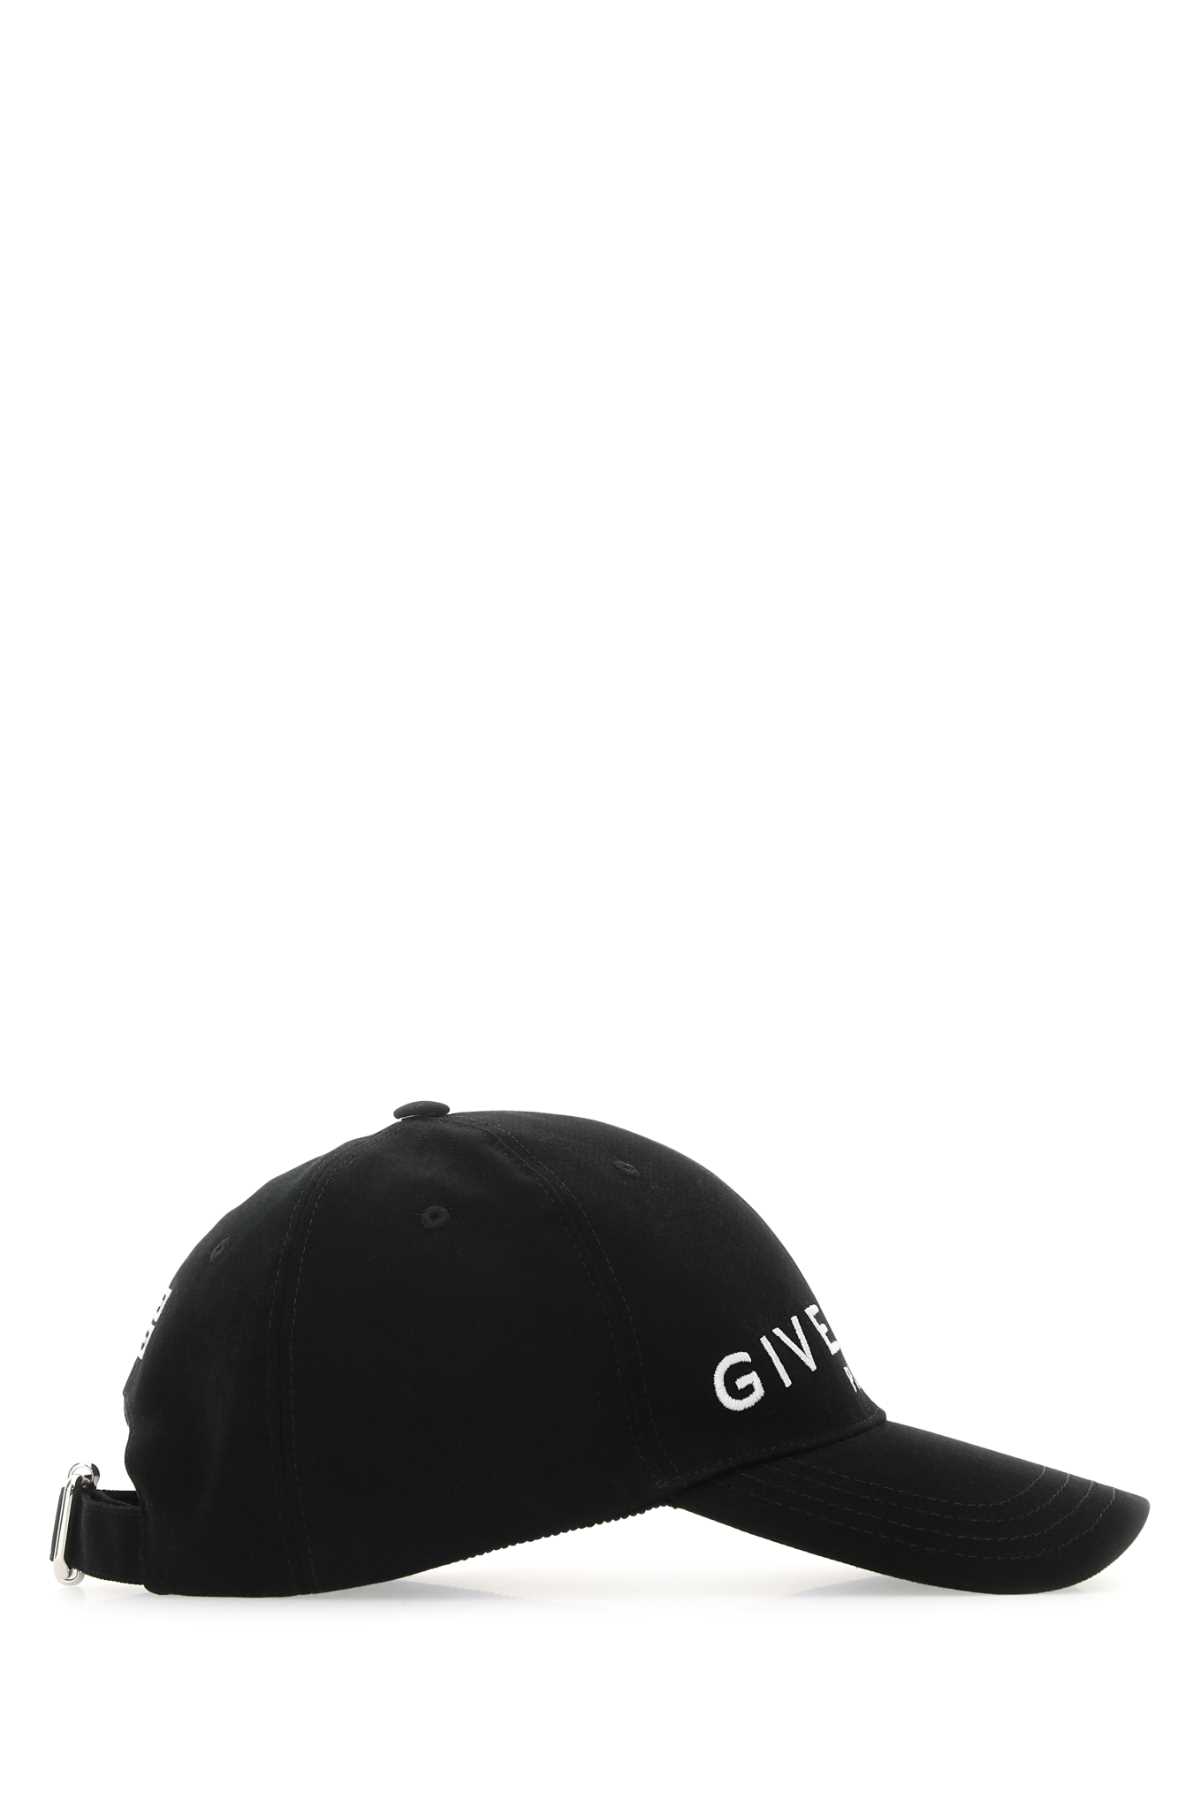 Shop Givenchy Black Cotton Blend Baseball Cap